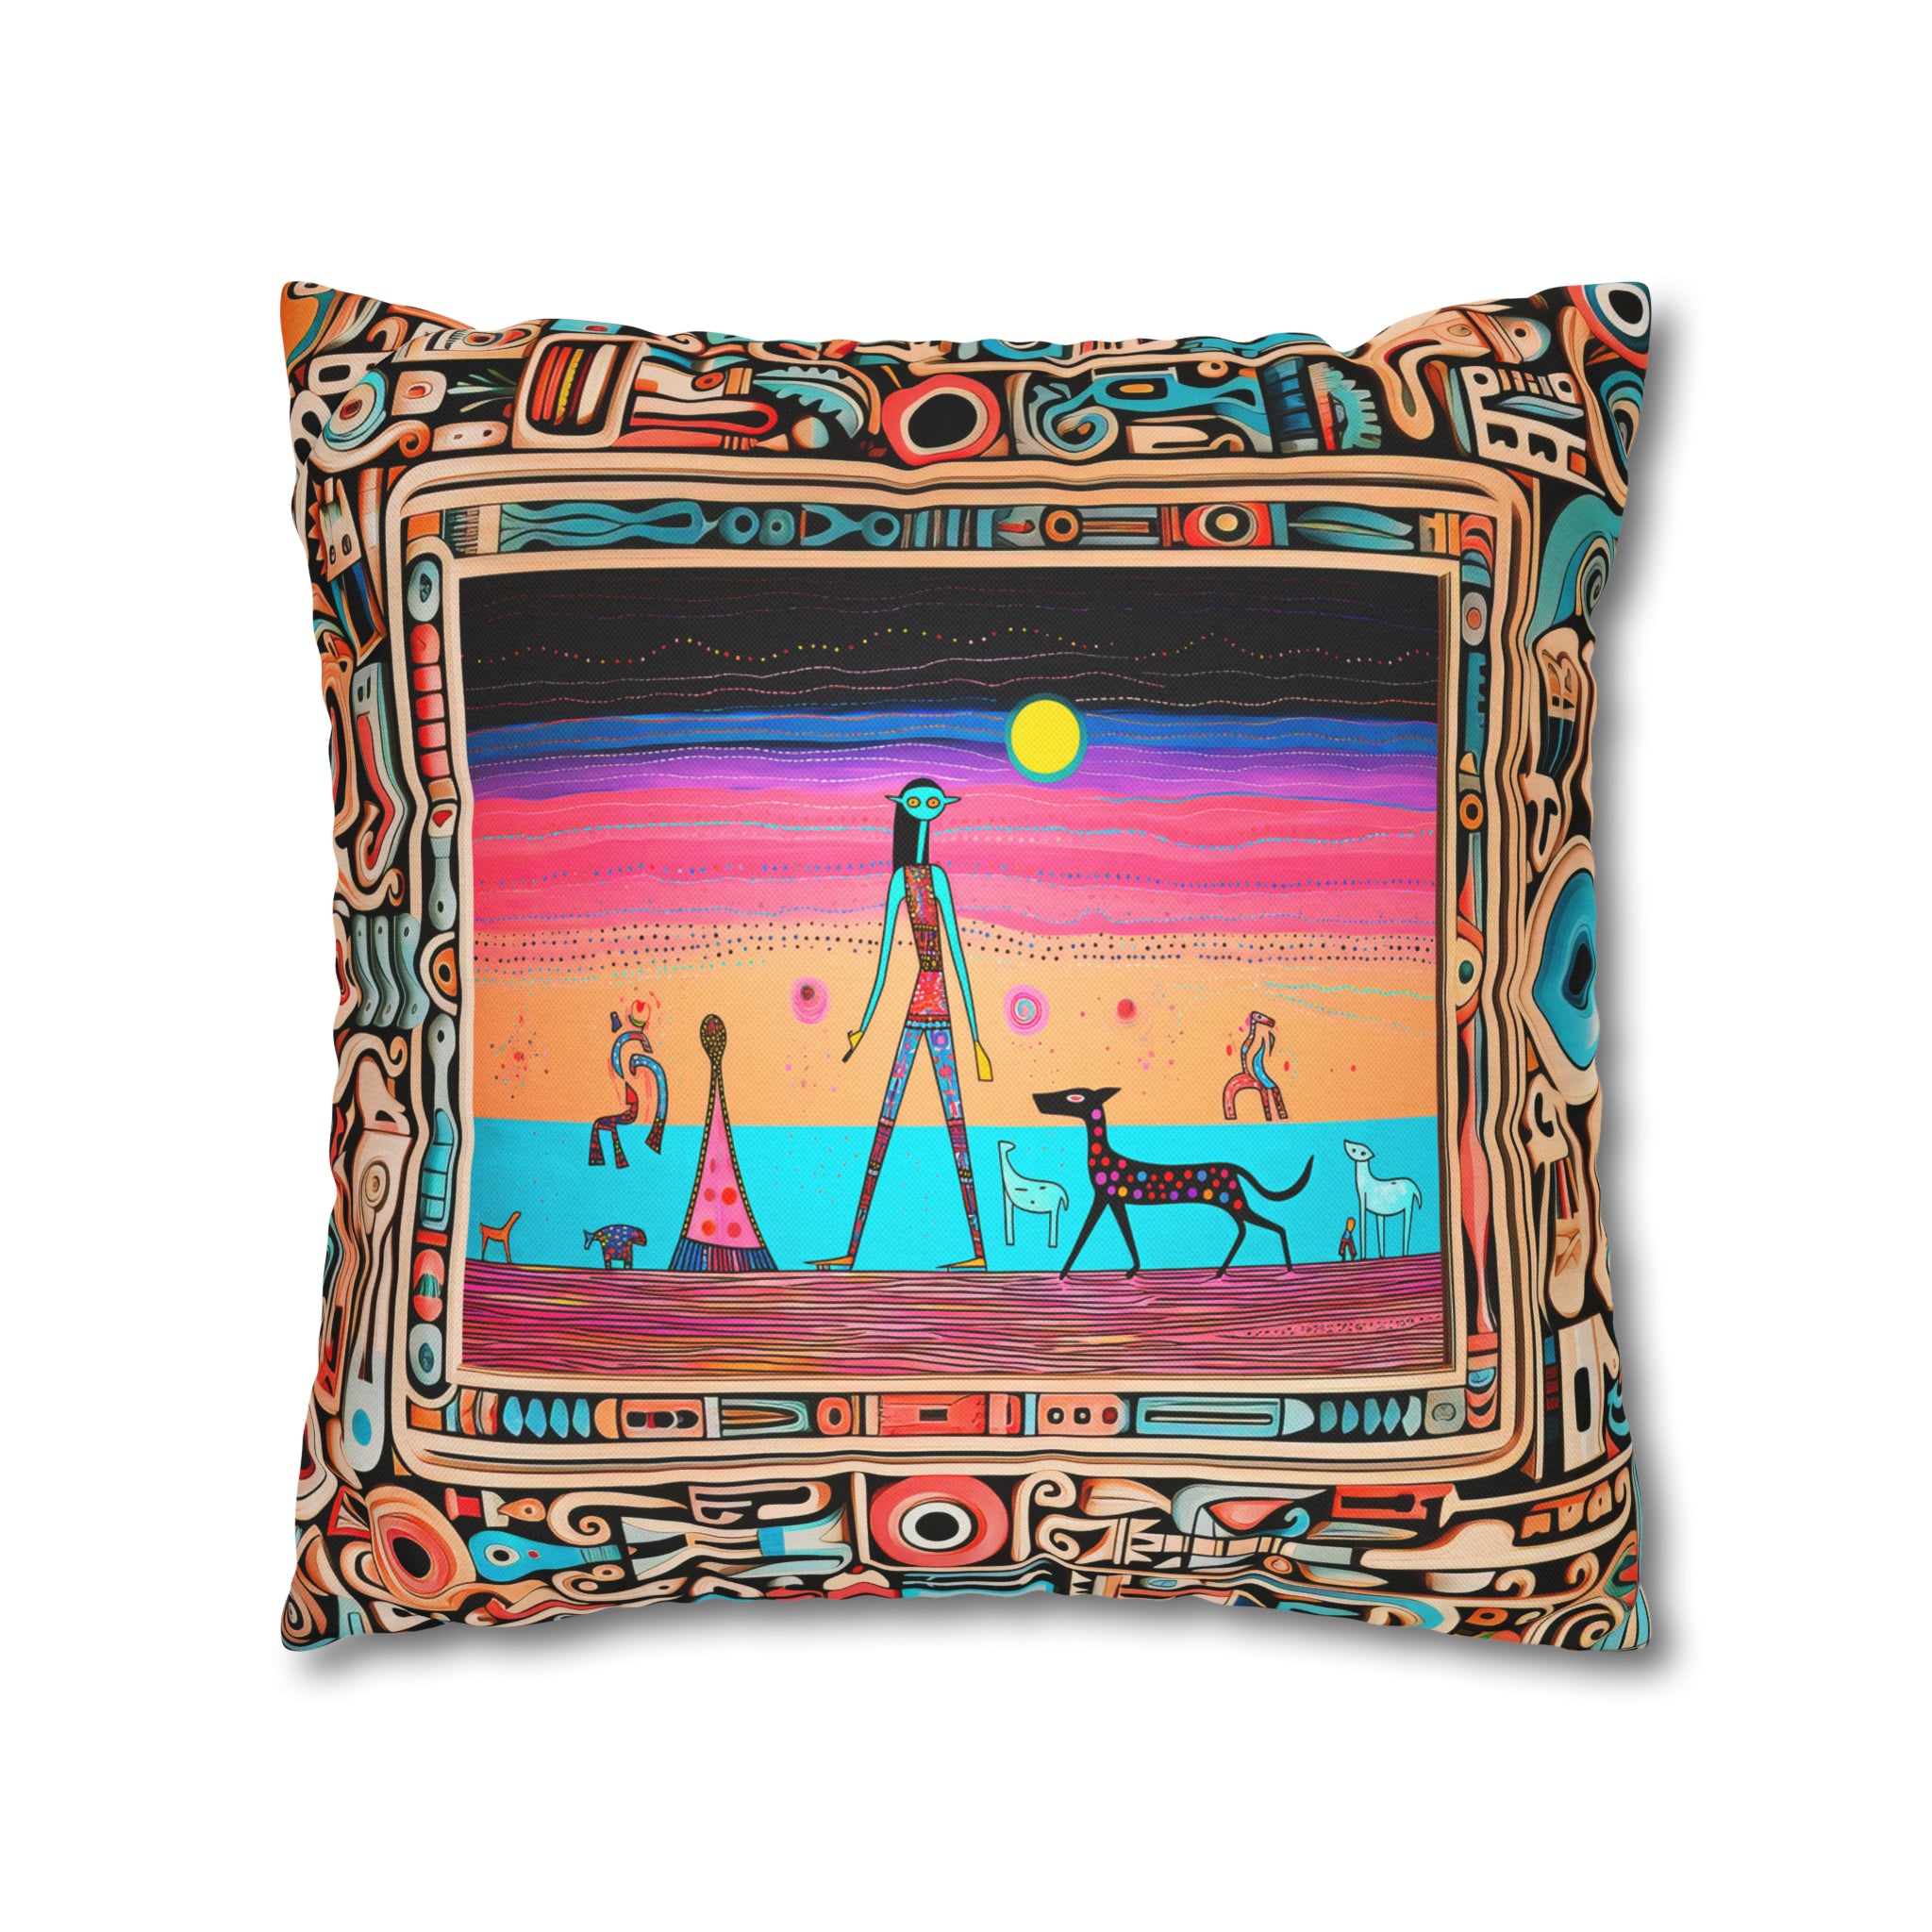 Square Pillow Case 18" x 18", CASE ONLY, no pillow form, original Pop Art Style, Beach Sunset on Mars, Framed